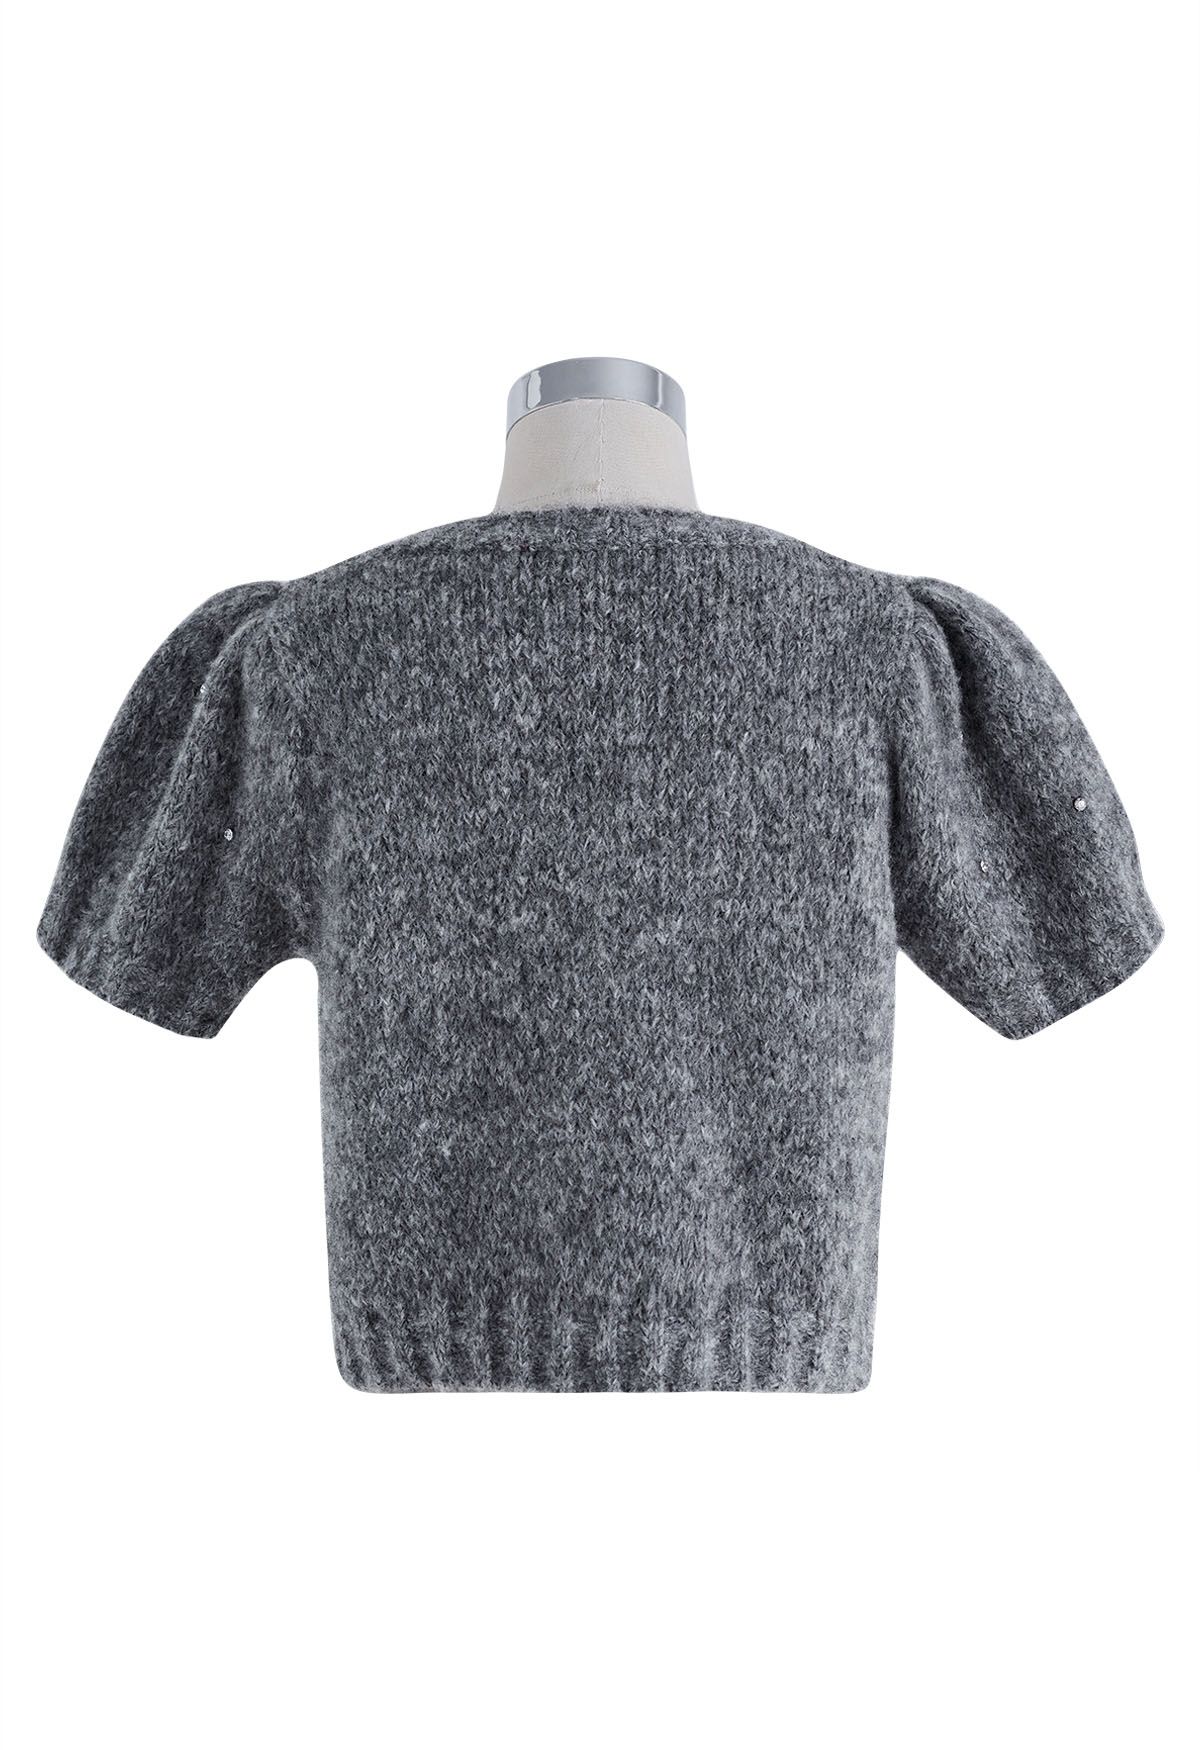 Rhinestone Embellished Fuzzy Knit Sweater in Grey